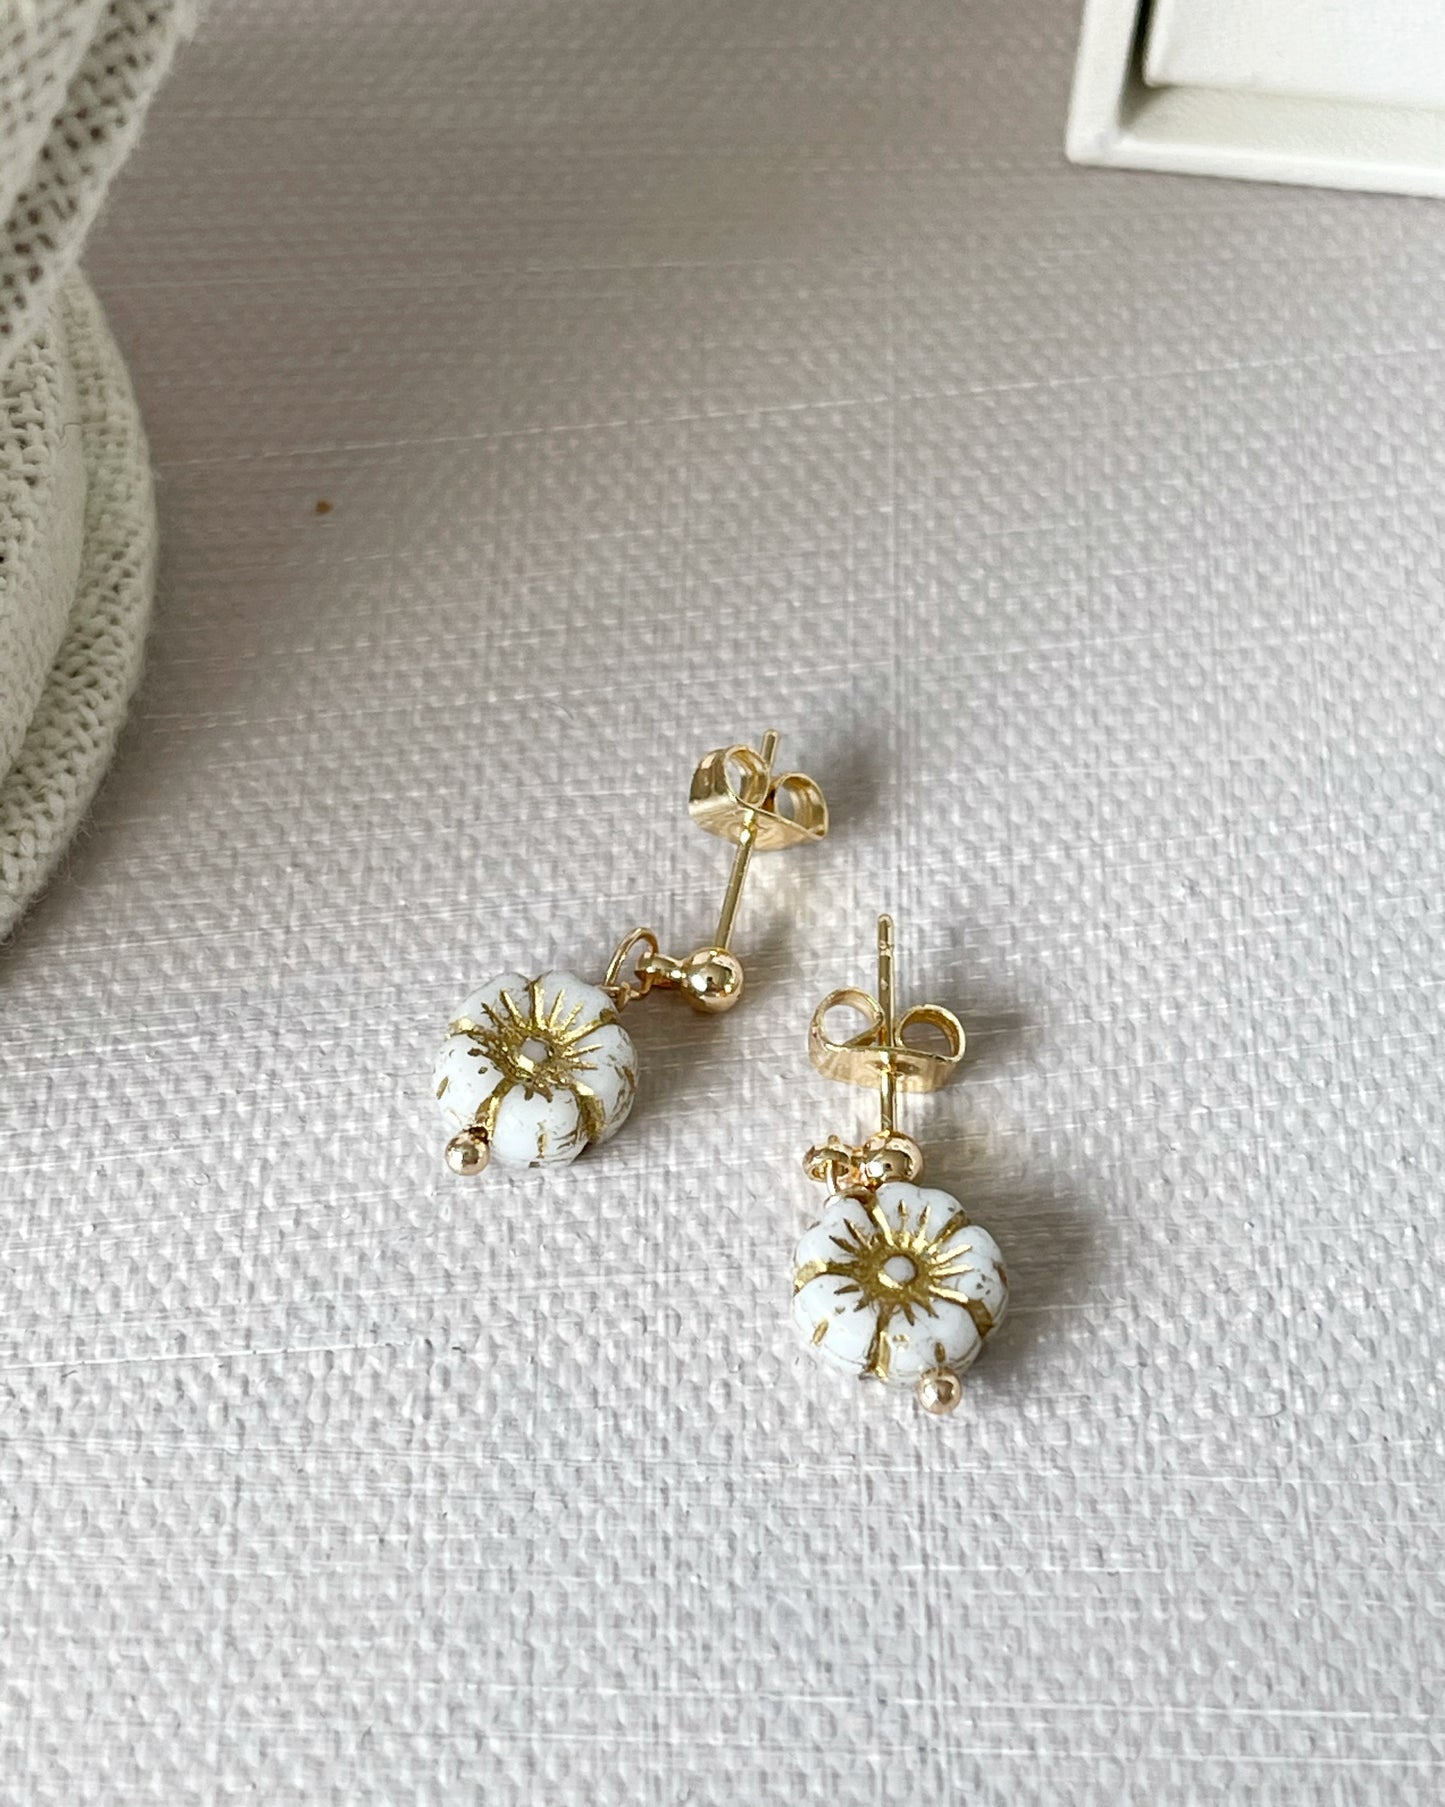 Mini sakura necklace and earrings set in antique white